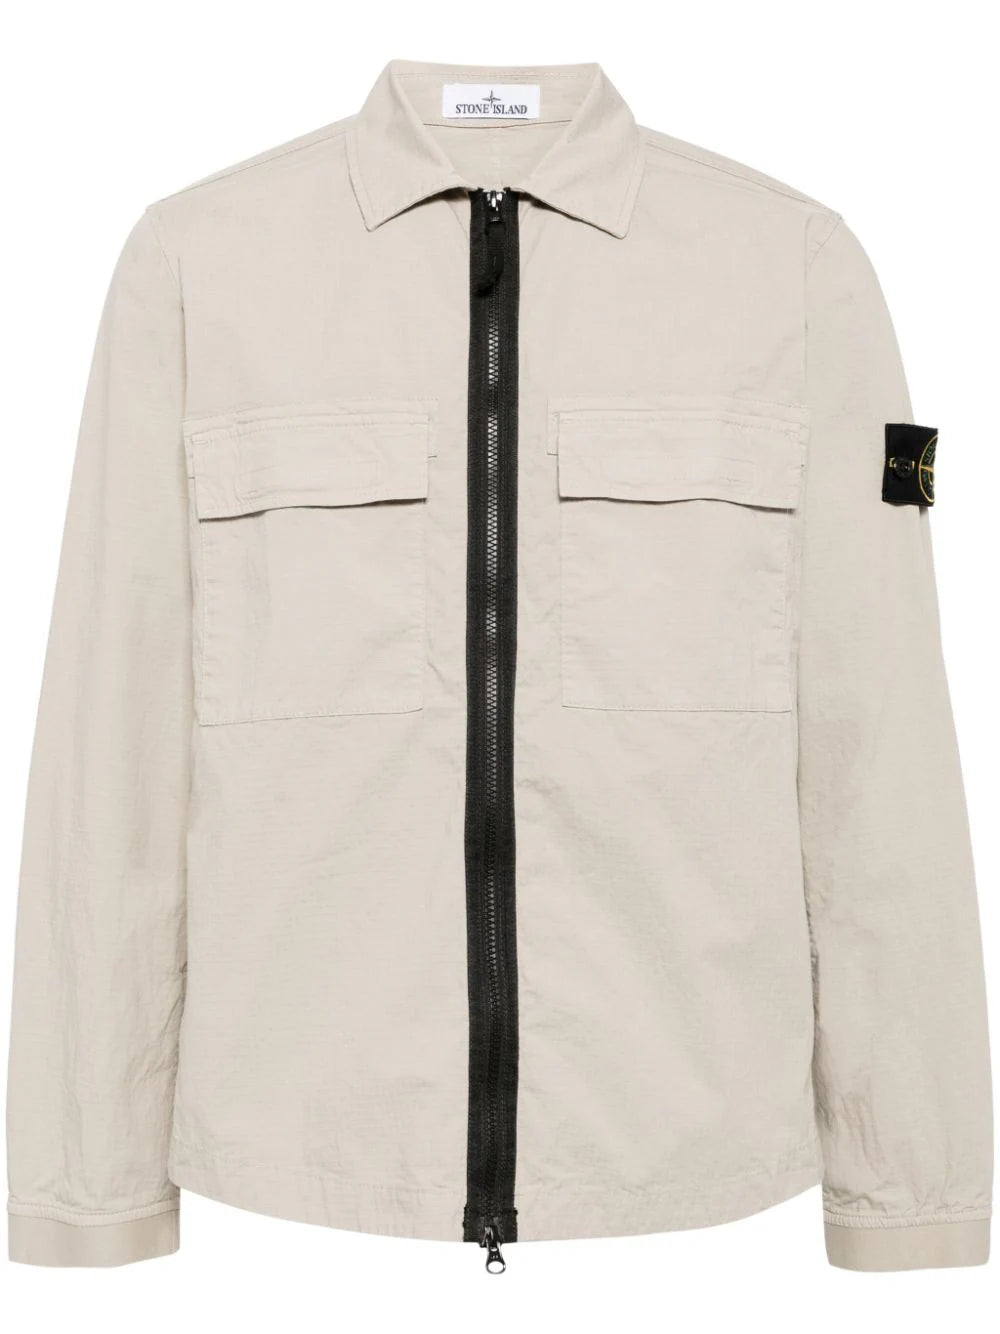 STONE ISLAND Double Pocket Regular Fit Overshirt Beige